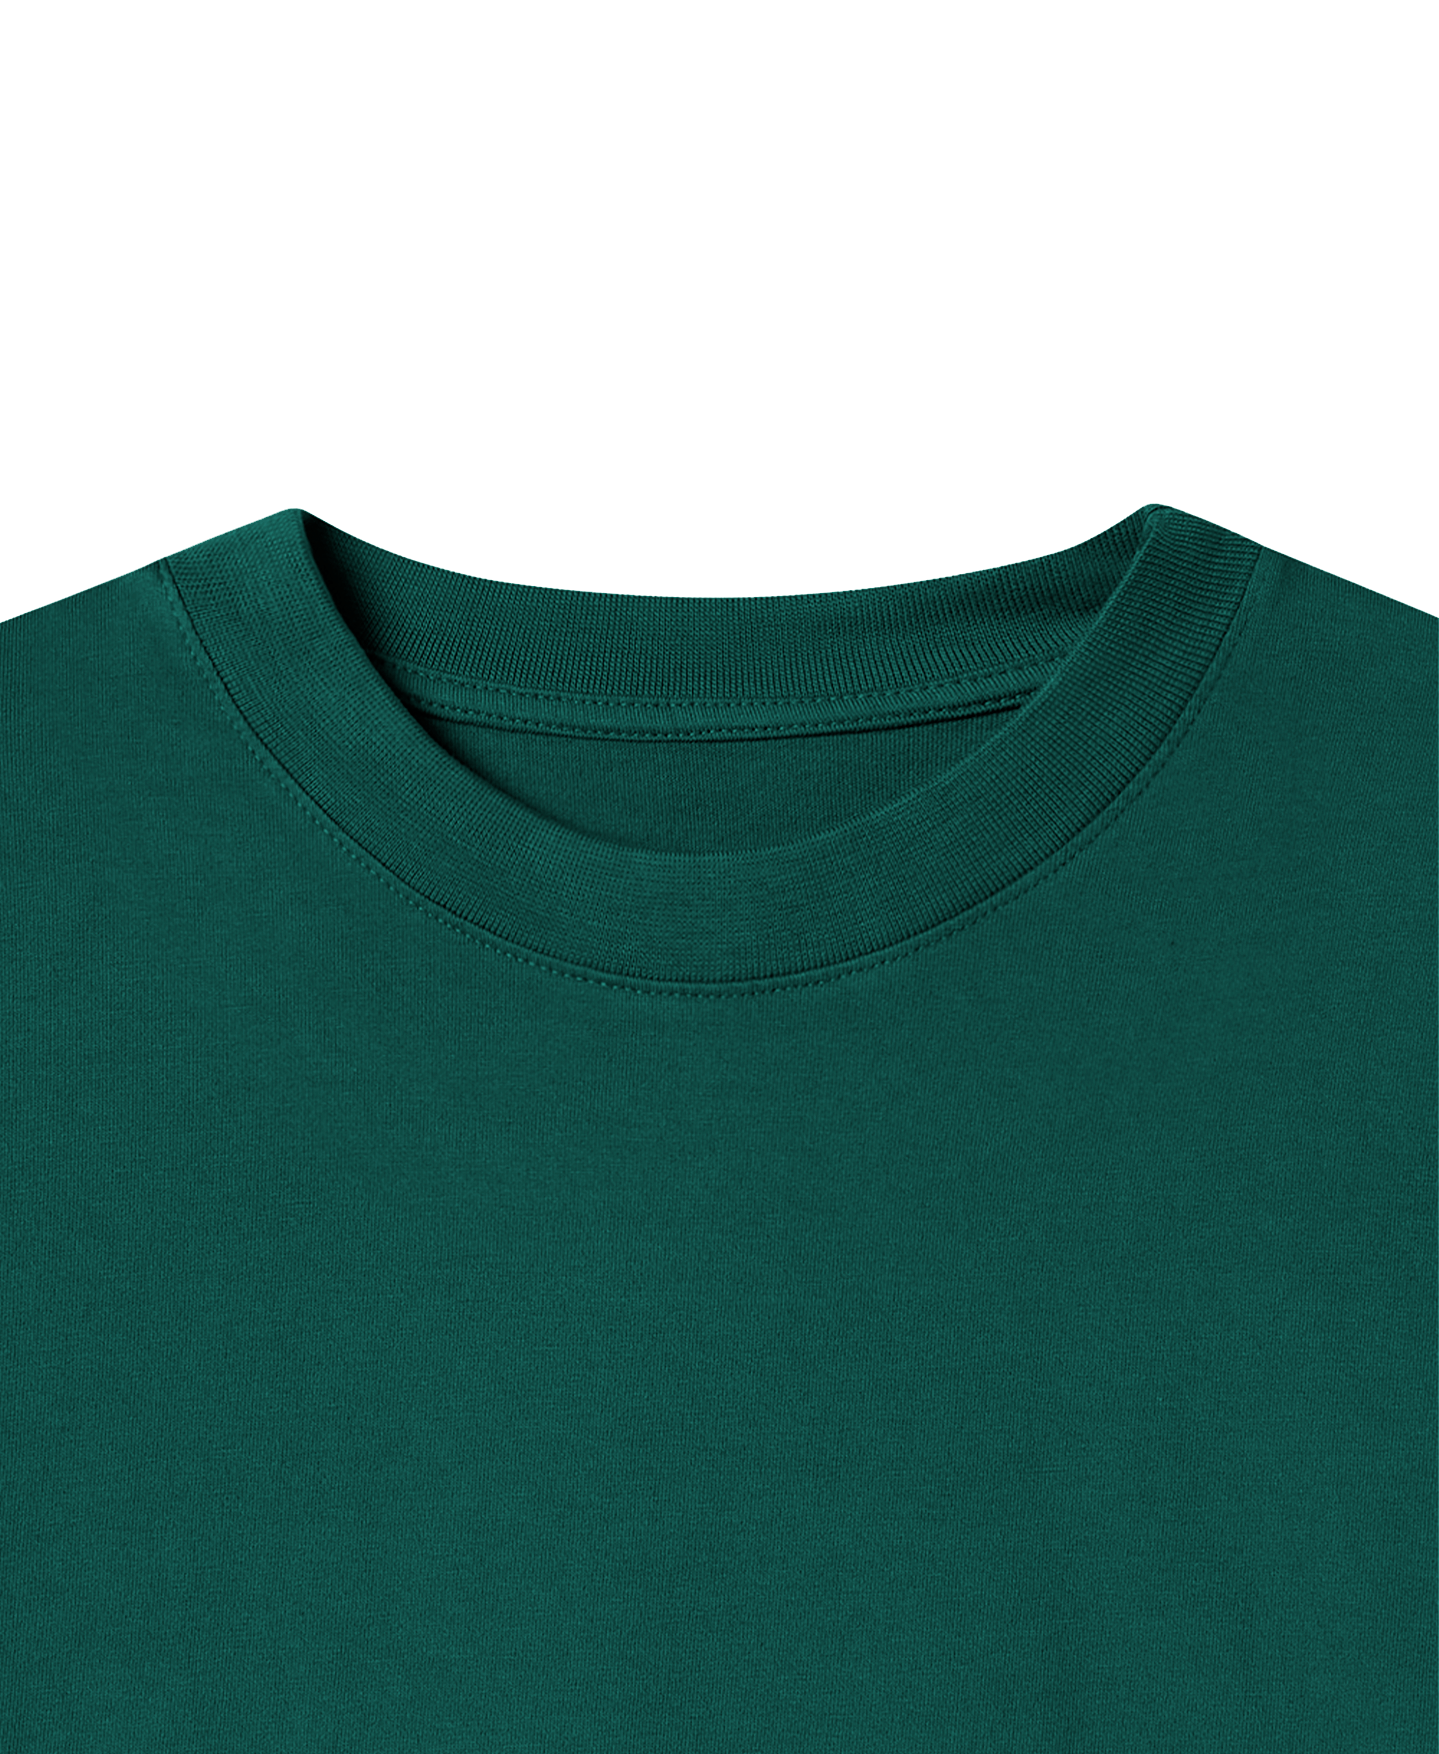 180 GSM 'British Racing Green' T-Shirt